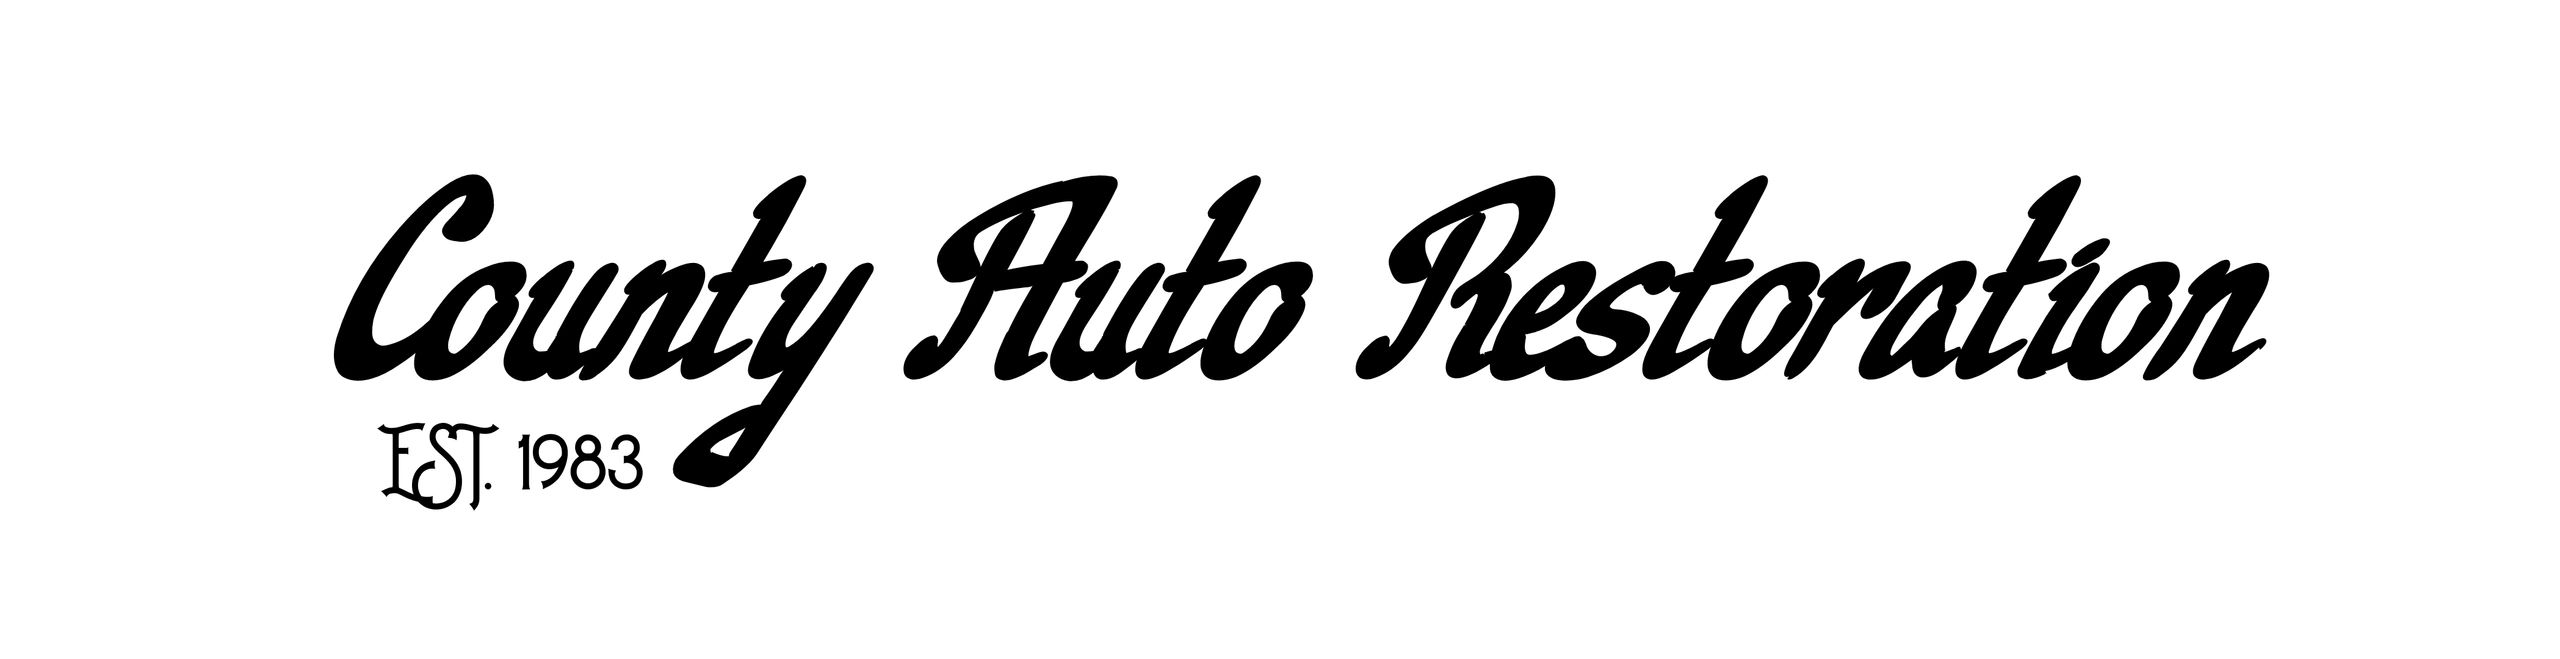 County Auto Restoration, vintage, restoration, restore, cars, classic